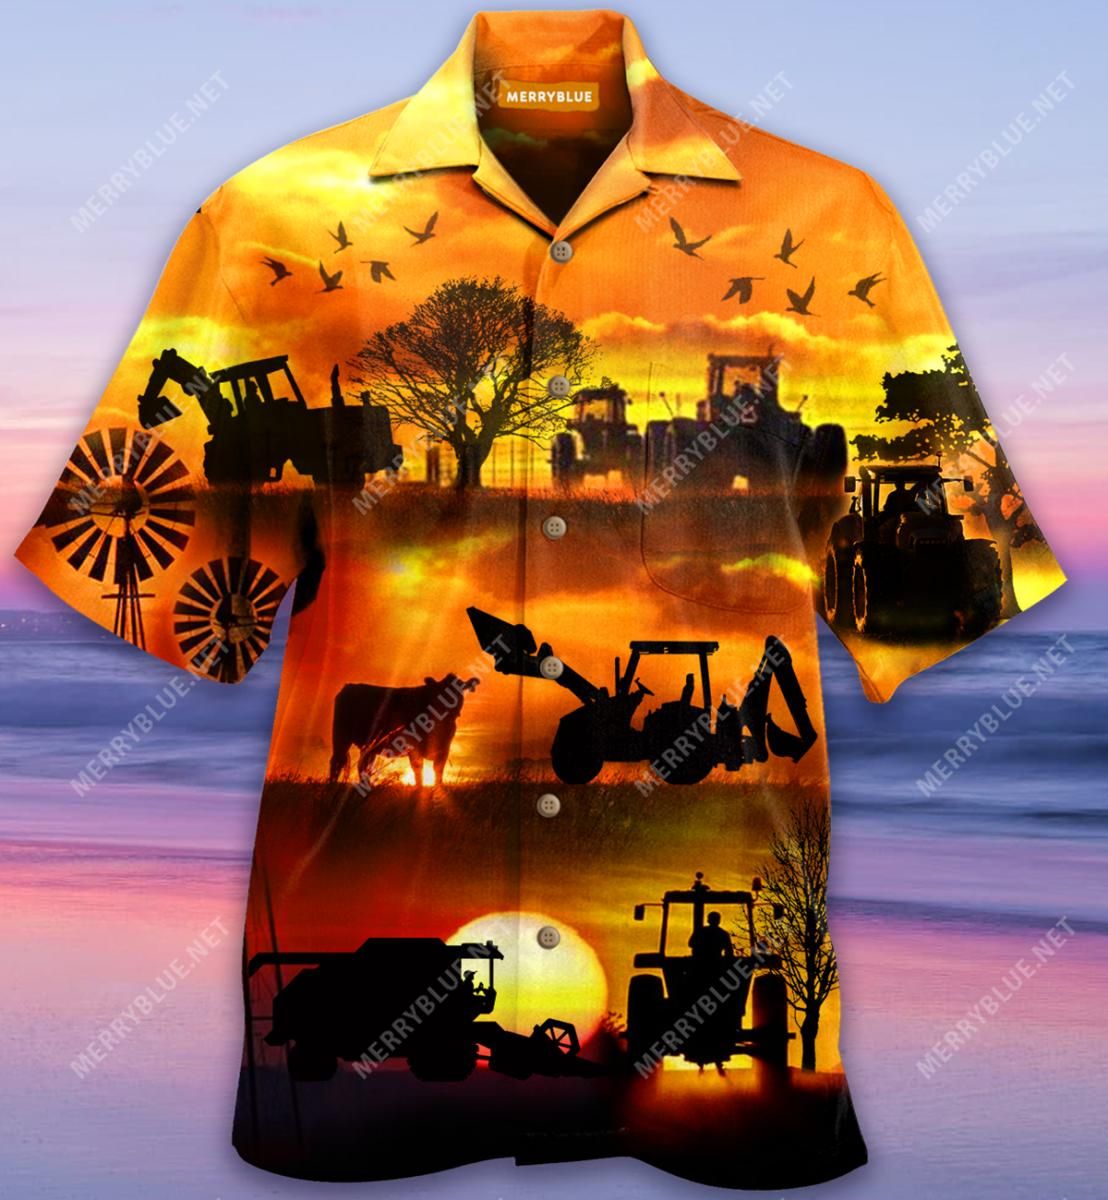 Farmers Work Til The Job Gets Done Aloha Hawaiian Shirt Colorful Short Sleeve Summer Beach Casual Shirt For Men And Women